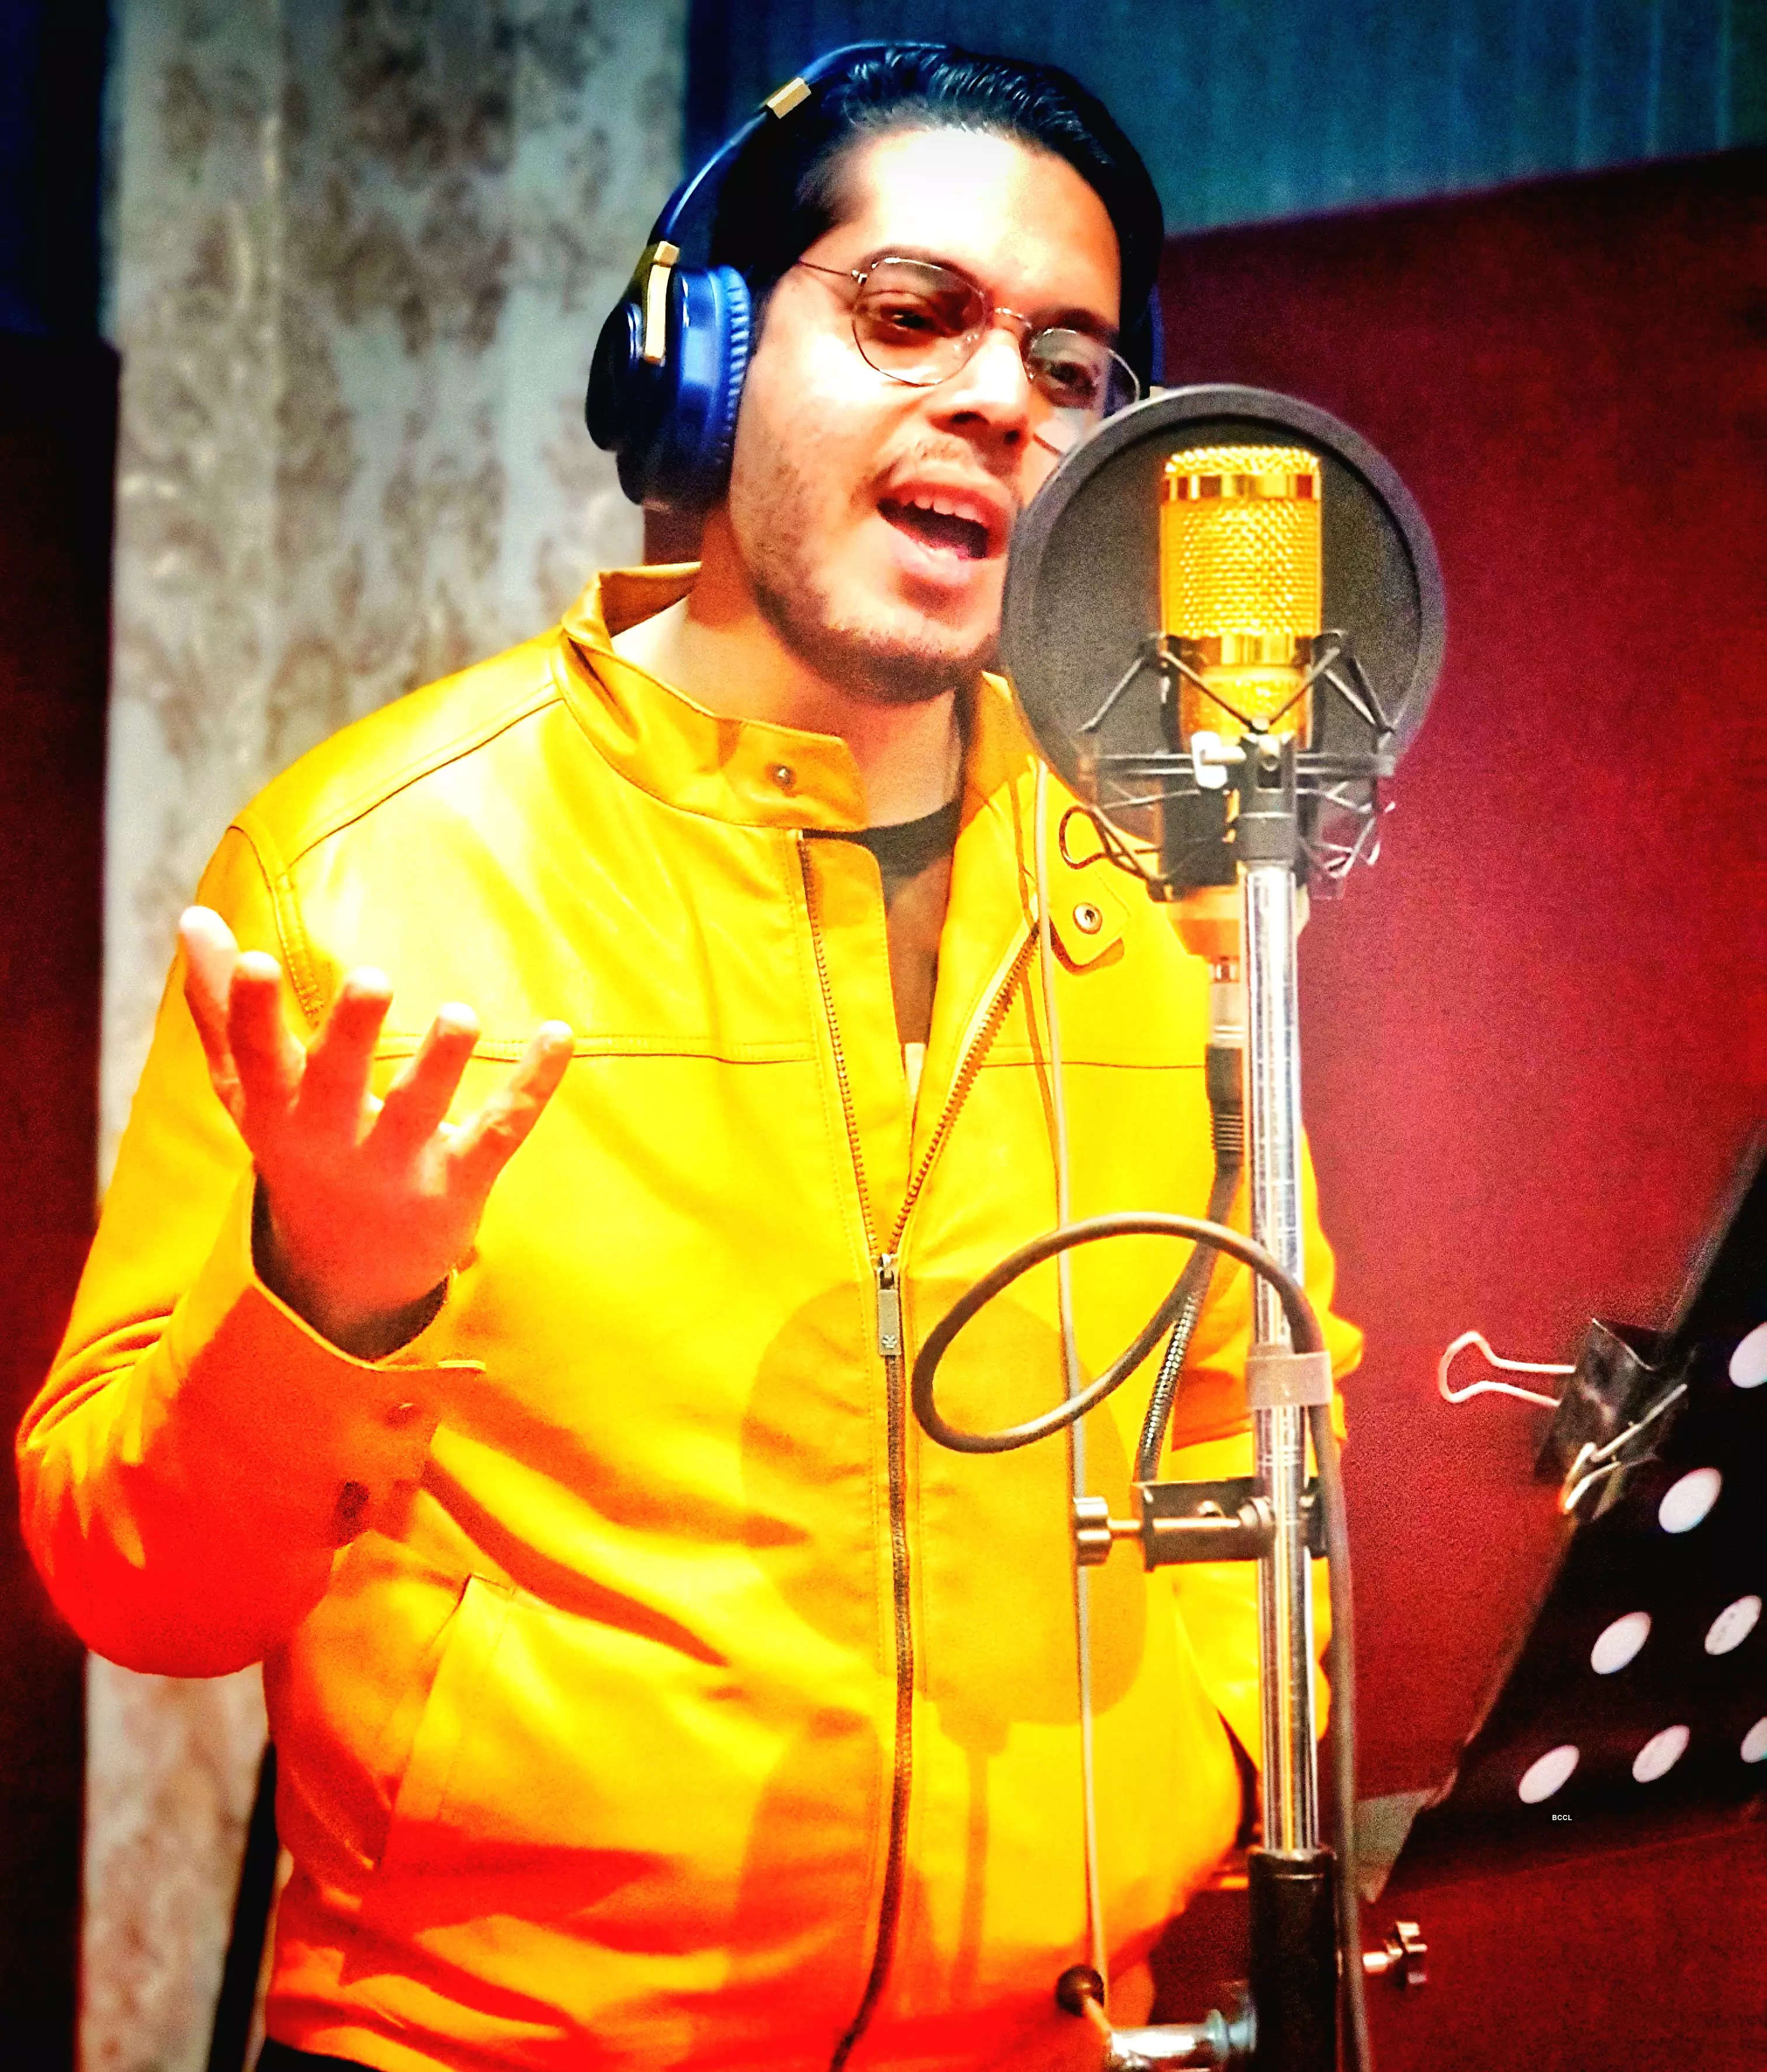 Meet actor & singer Someshwar Mahadevan, a.k.a. Singer Sam, see photos